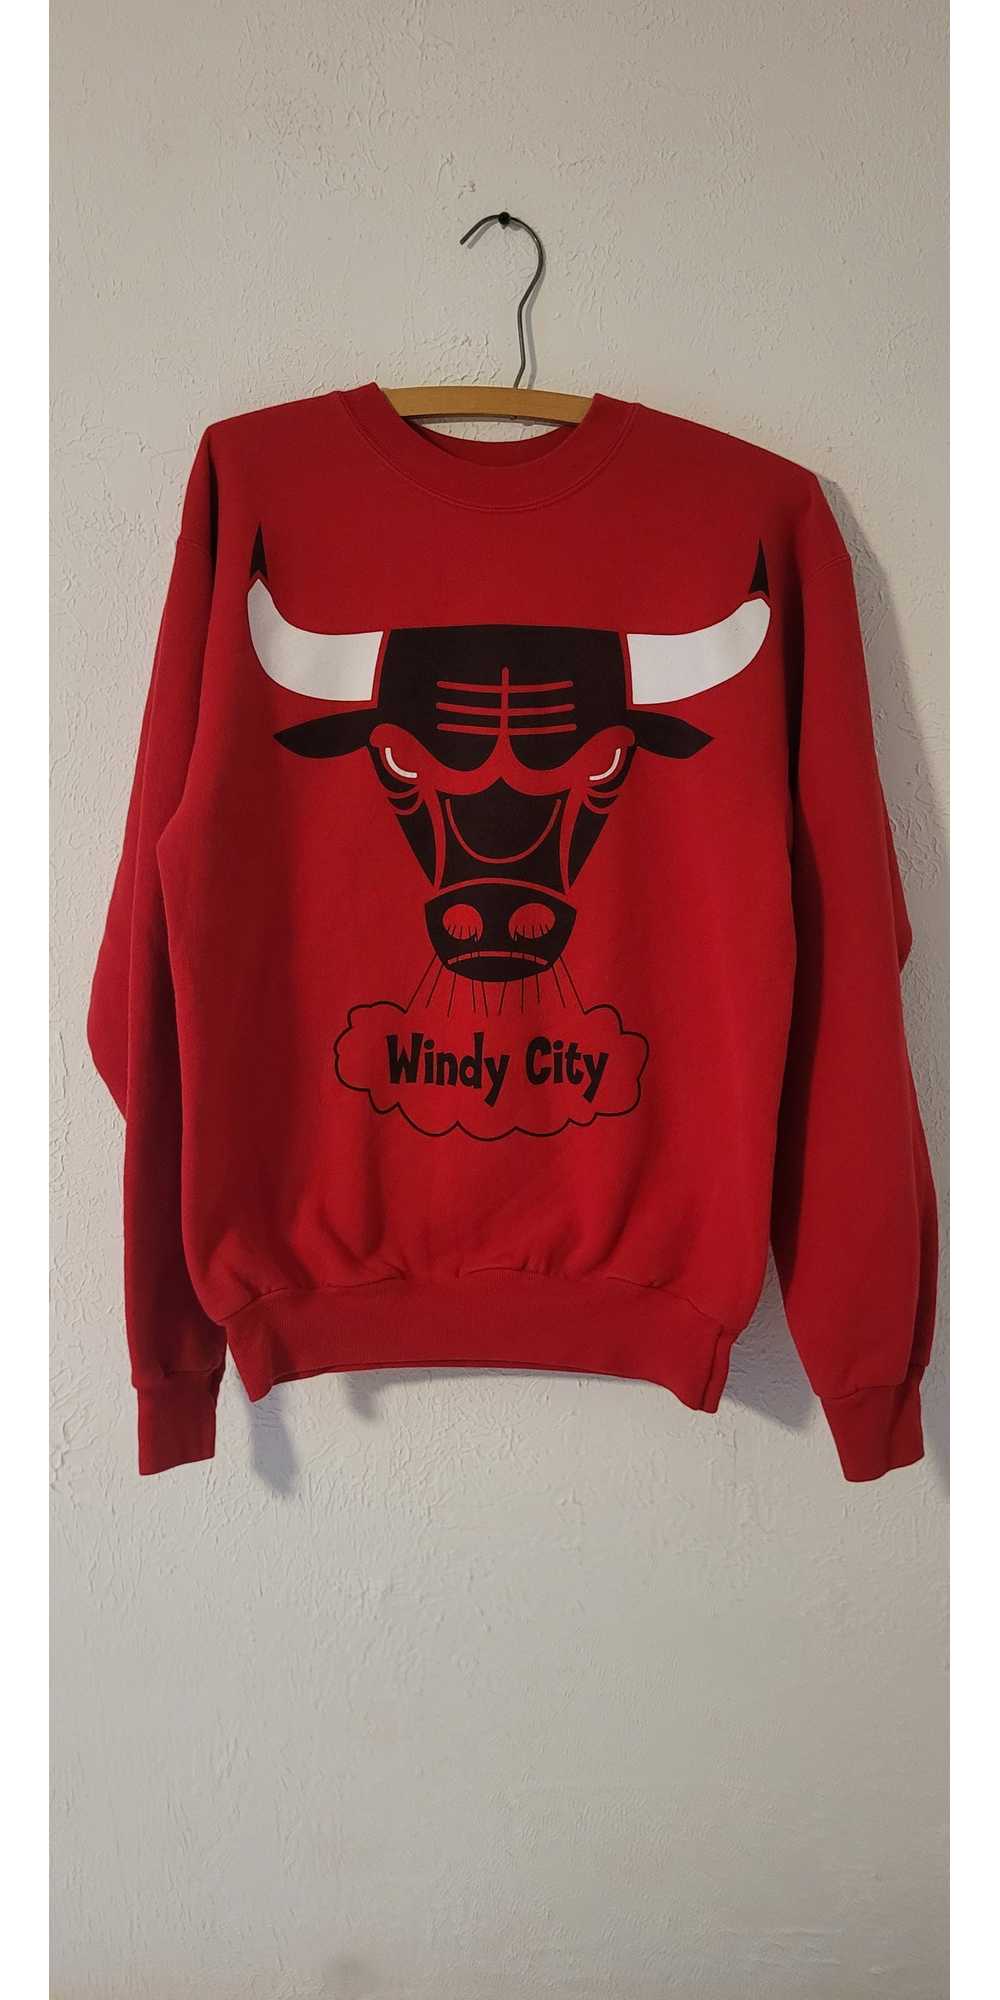 Chicago Bulls Vintage Chicago bulls sweater - image 1